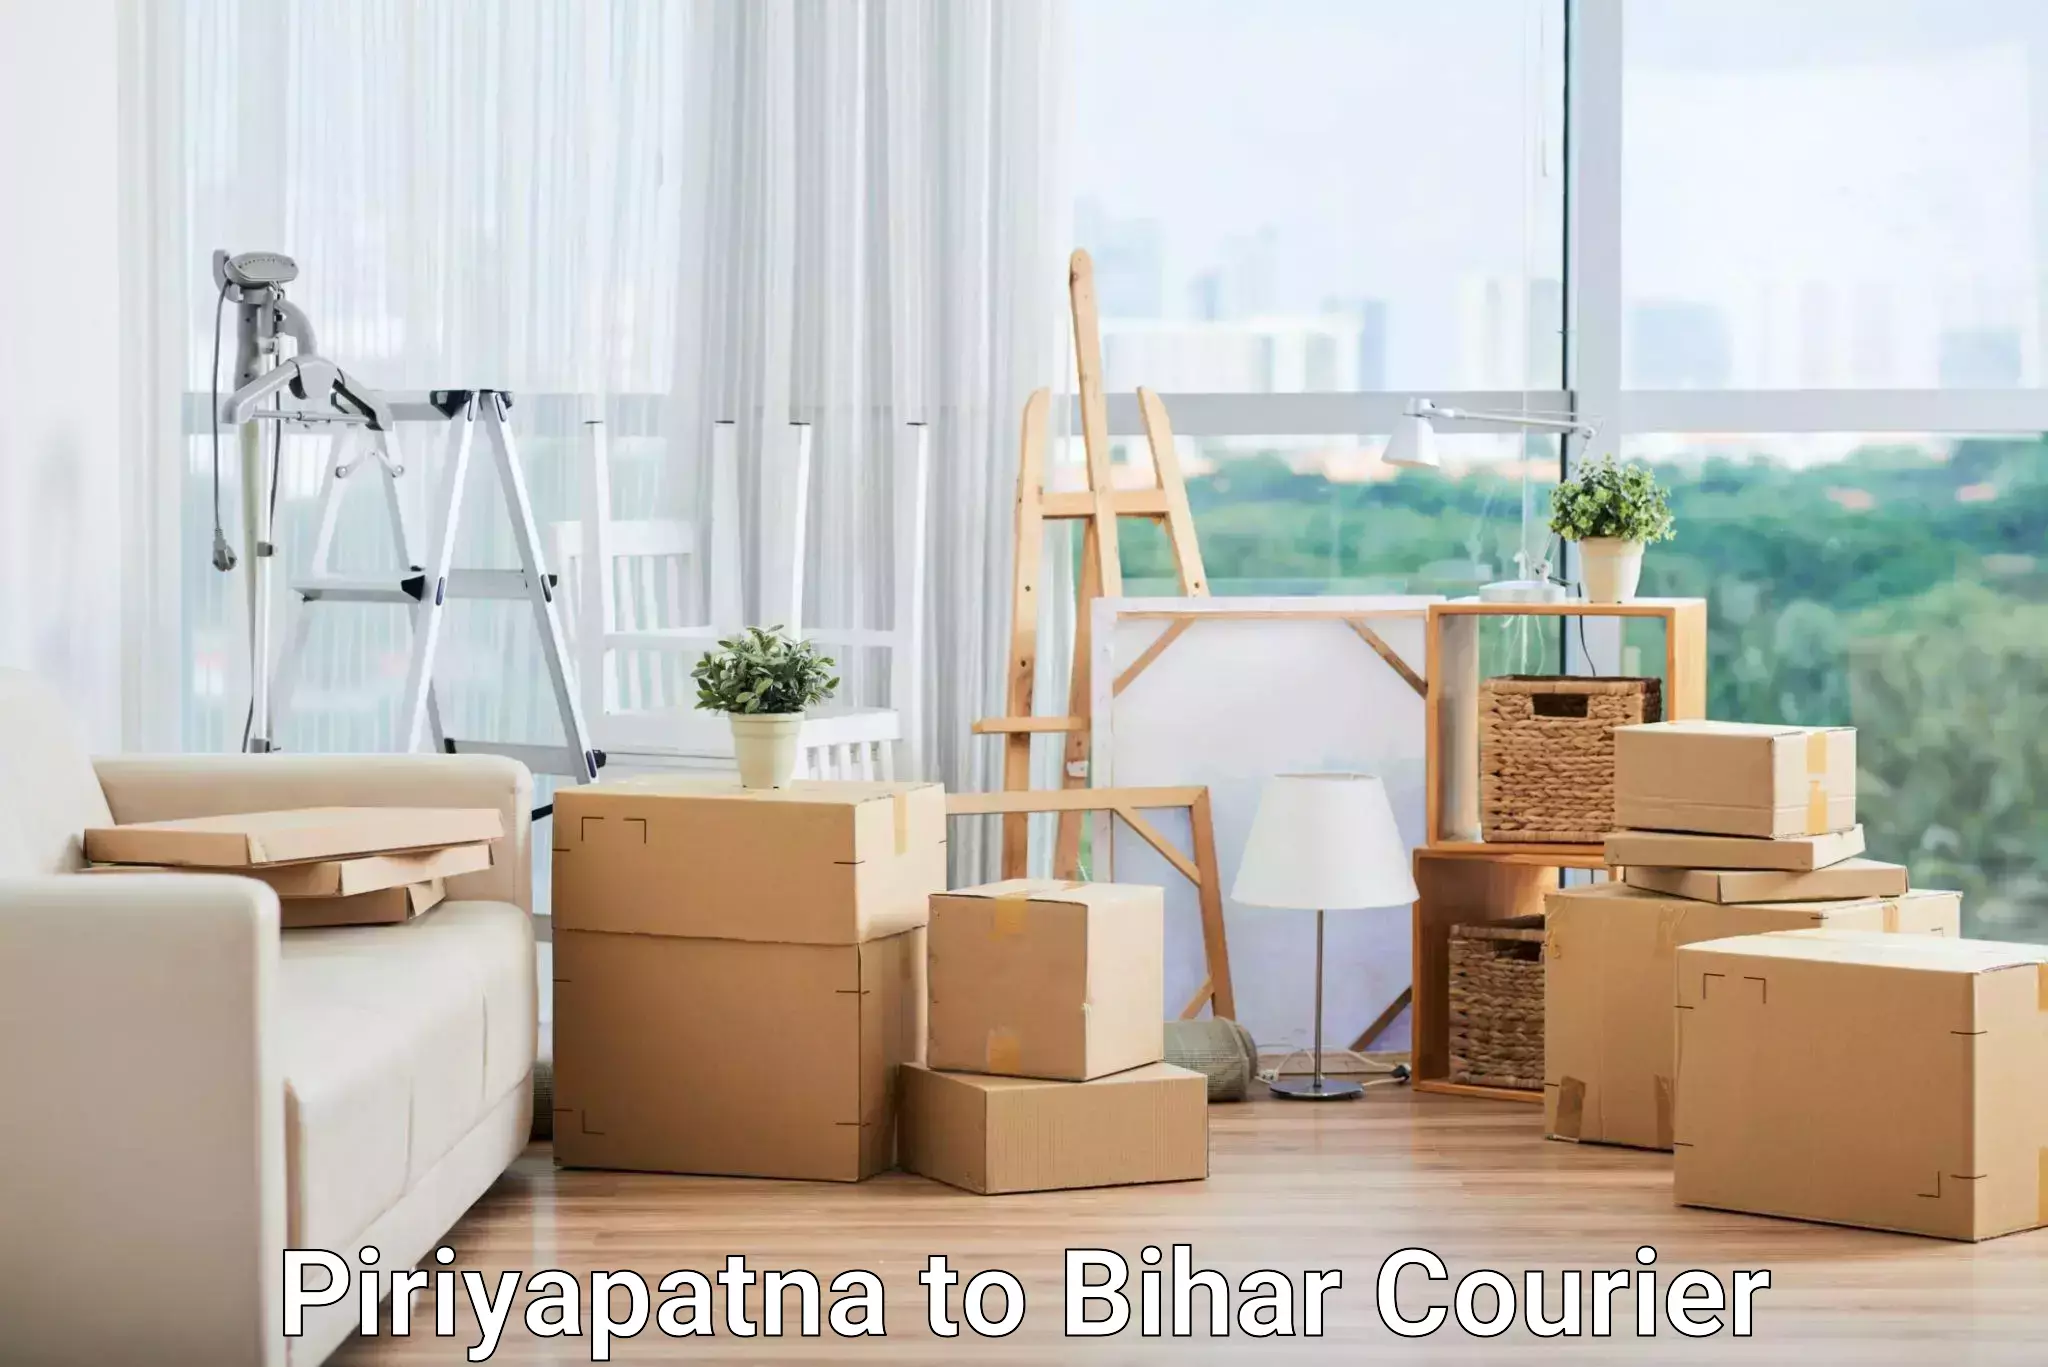 User-friendly delivery service Piriyapatna to Bihar